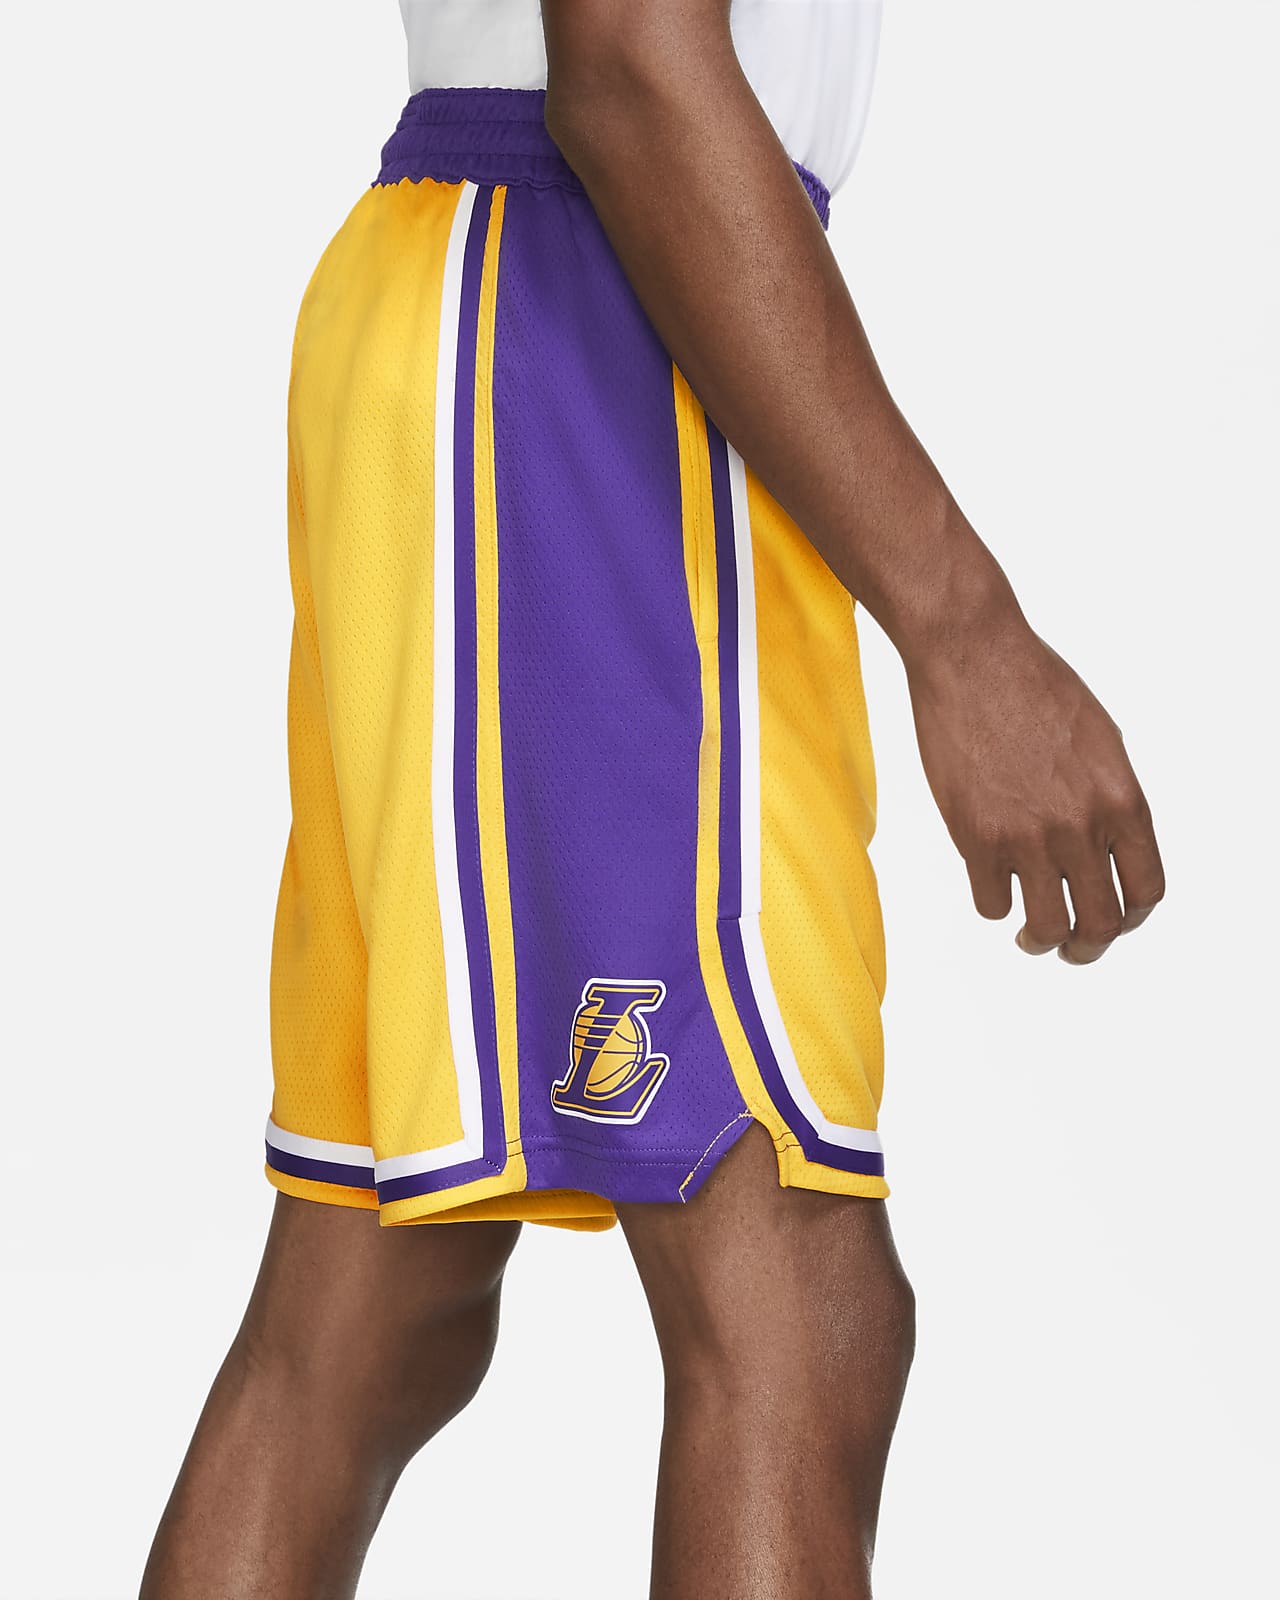 lakers purple swingman shorts